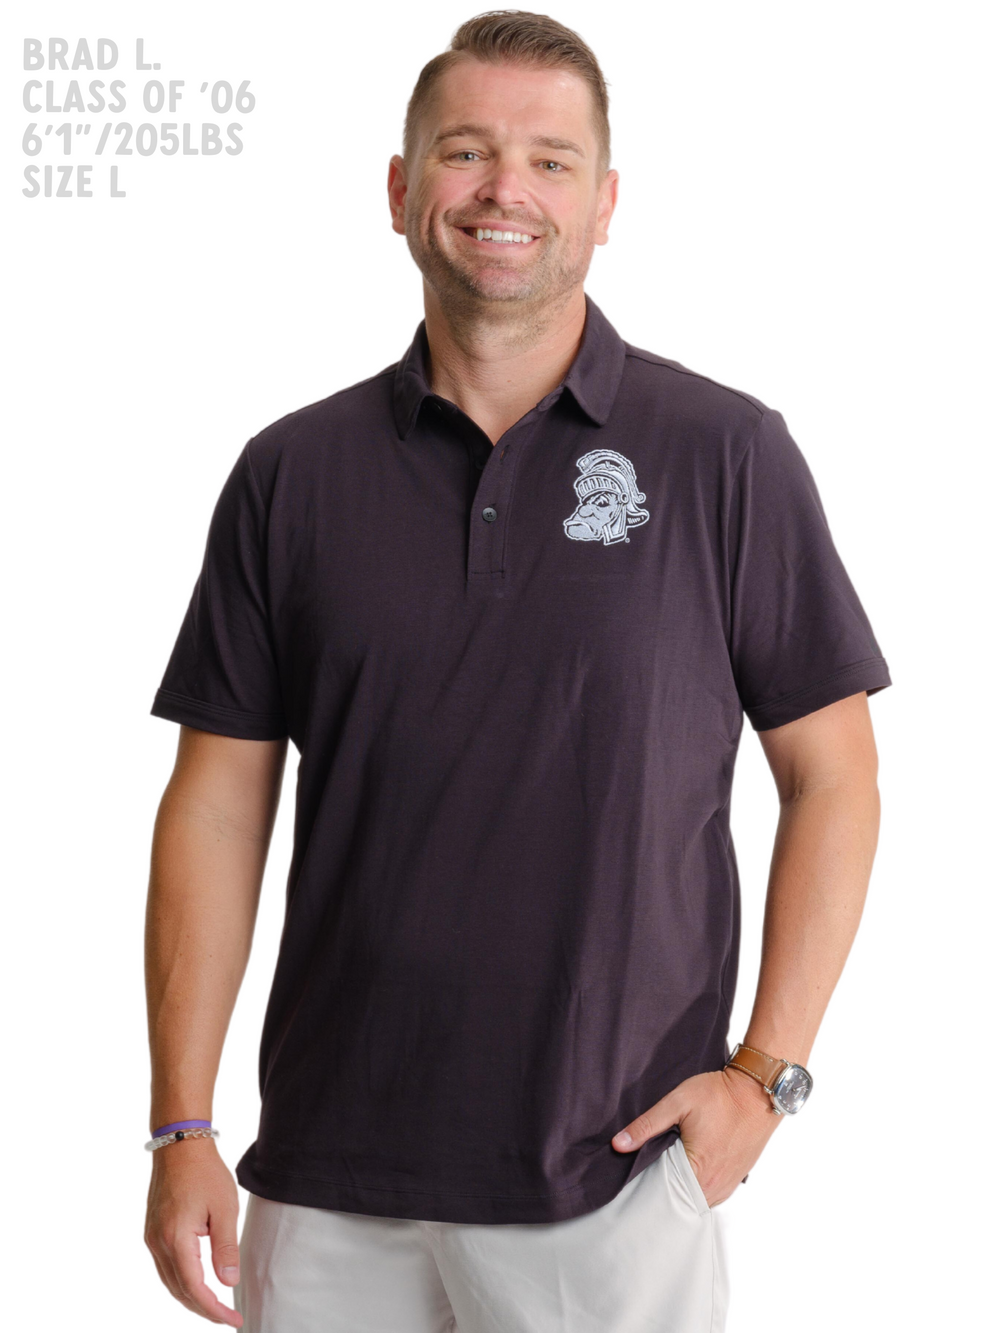 Gruff Sparty Golfing Polo Black MSU Michigan State University Spartans Collard Shirt